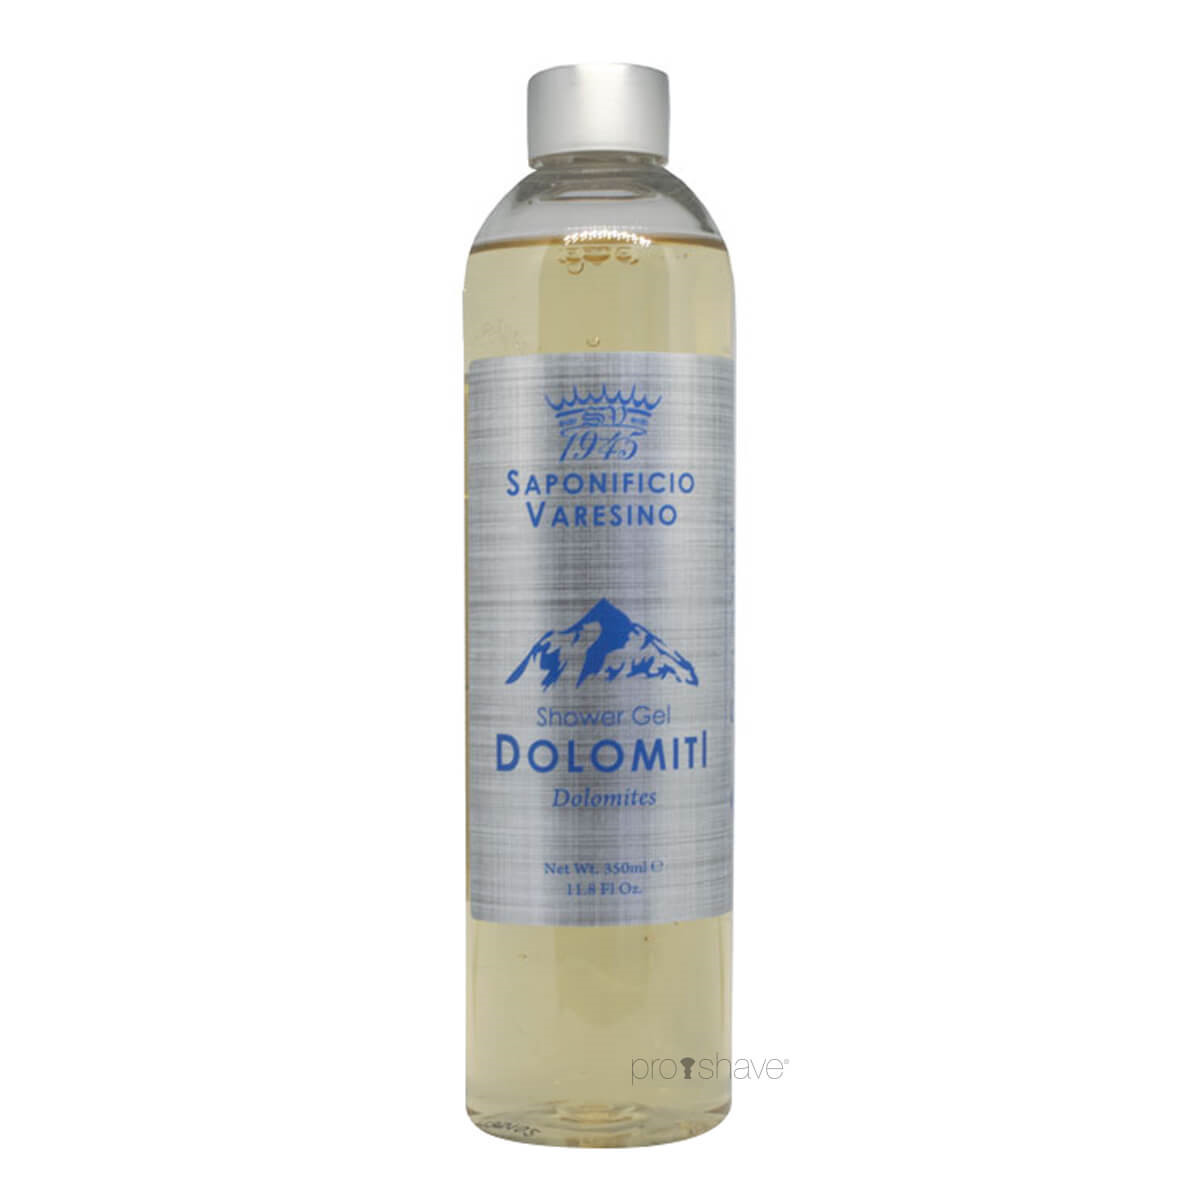 Se Saponificio Varesino Shower Gel, Dolomiti, 350 ml. hos Proshave